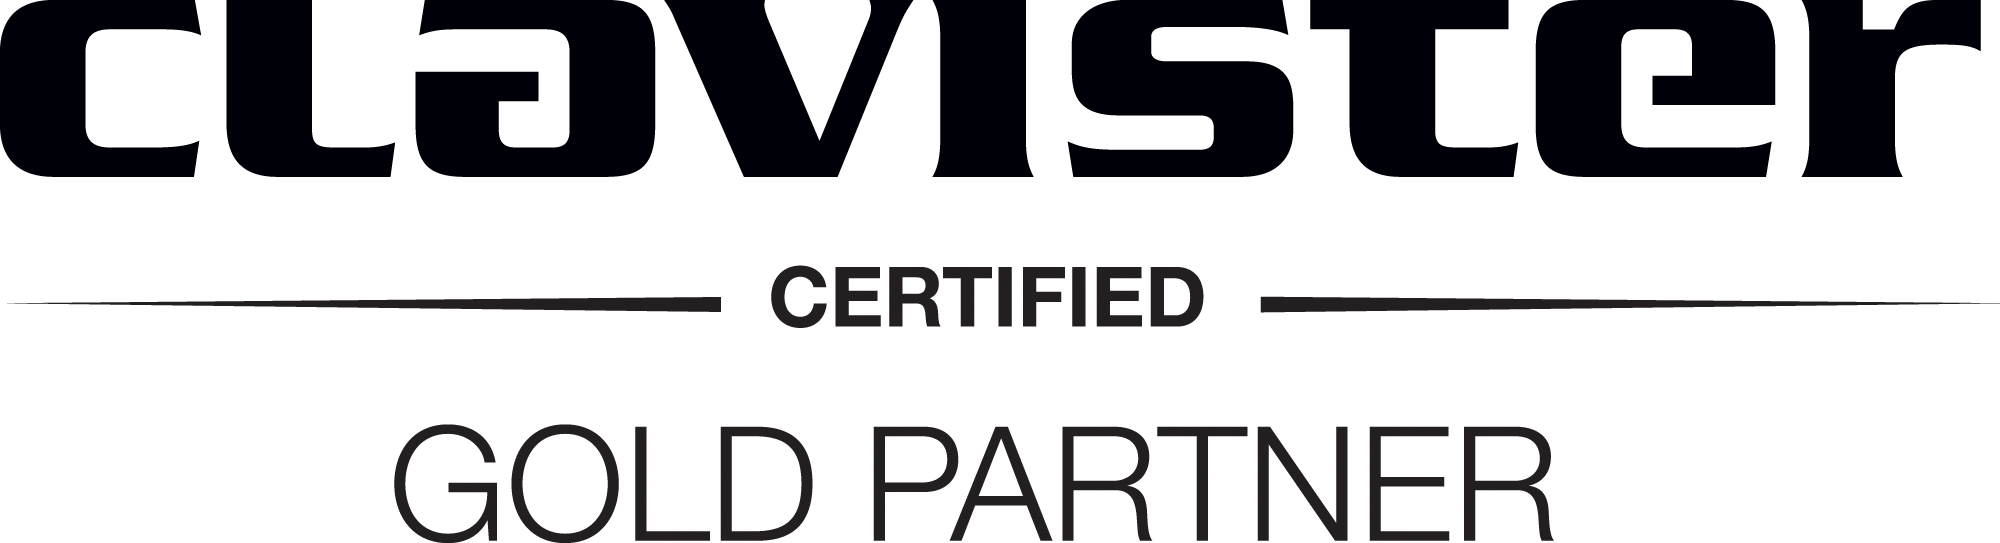 Clavister certified gold partner logo